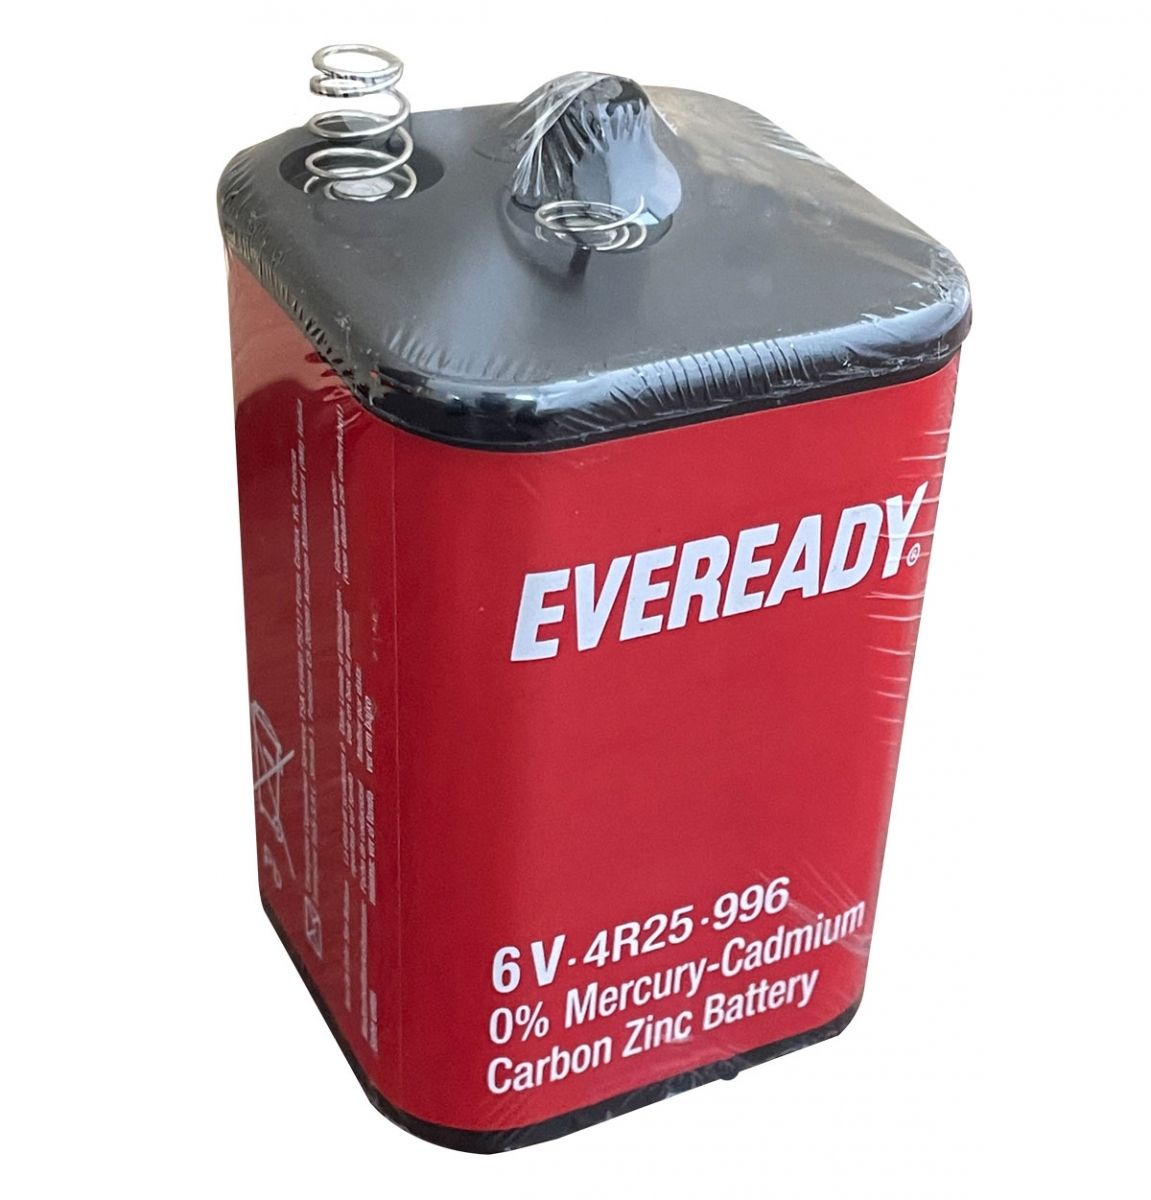 Energizer Eveready PJ996 Torch Battery 6V (4R25 996)